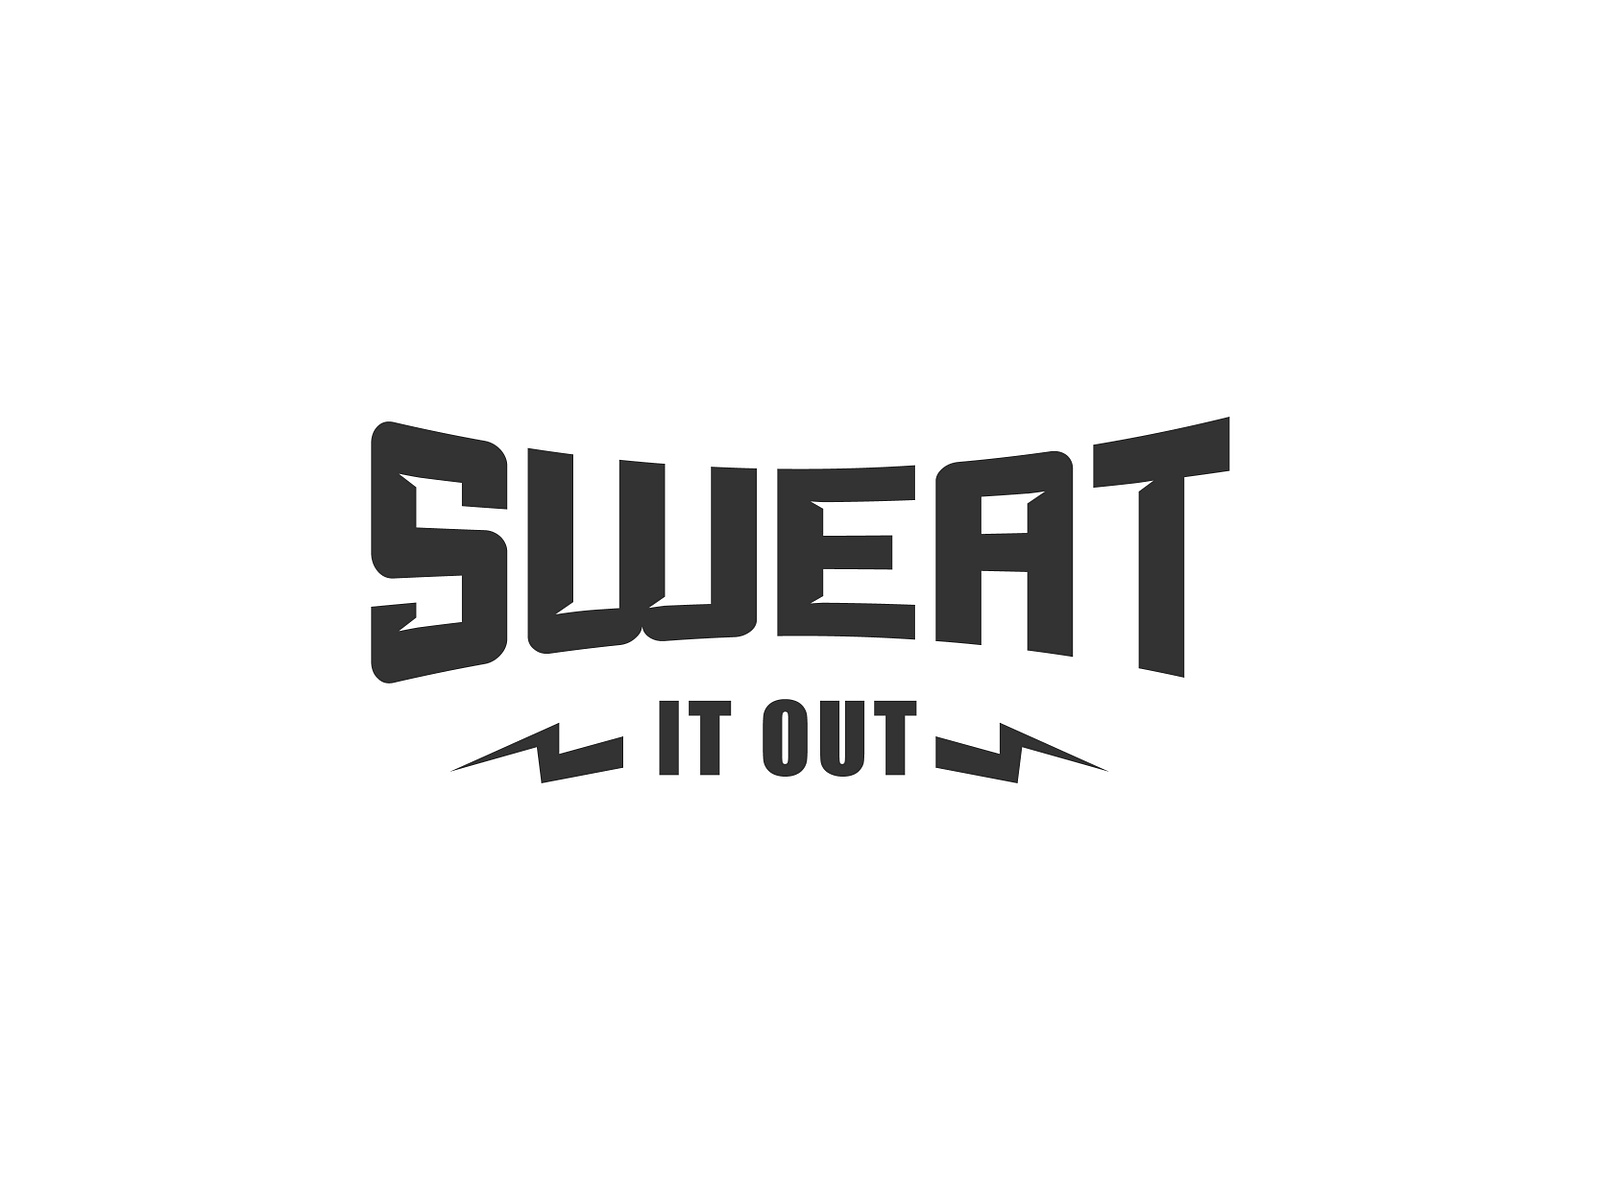 Sweat it Out by THOUFIQ on Dribbble